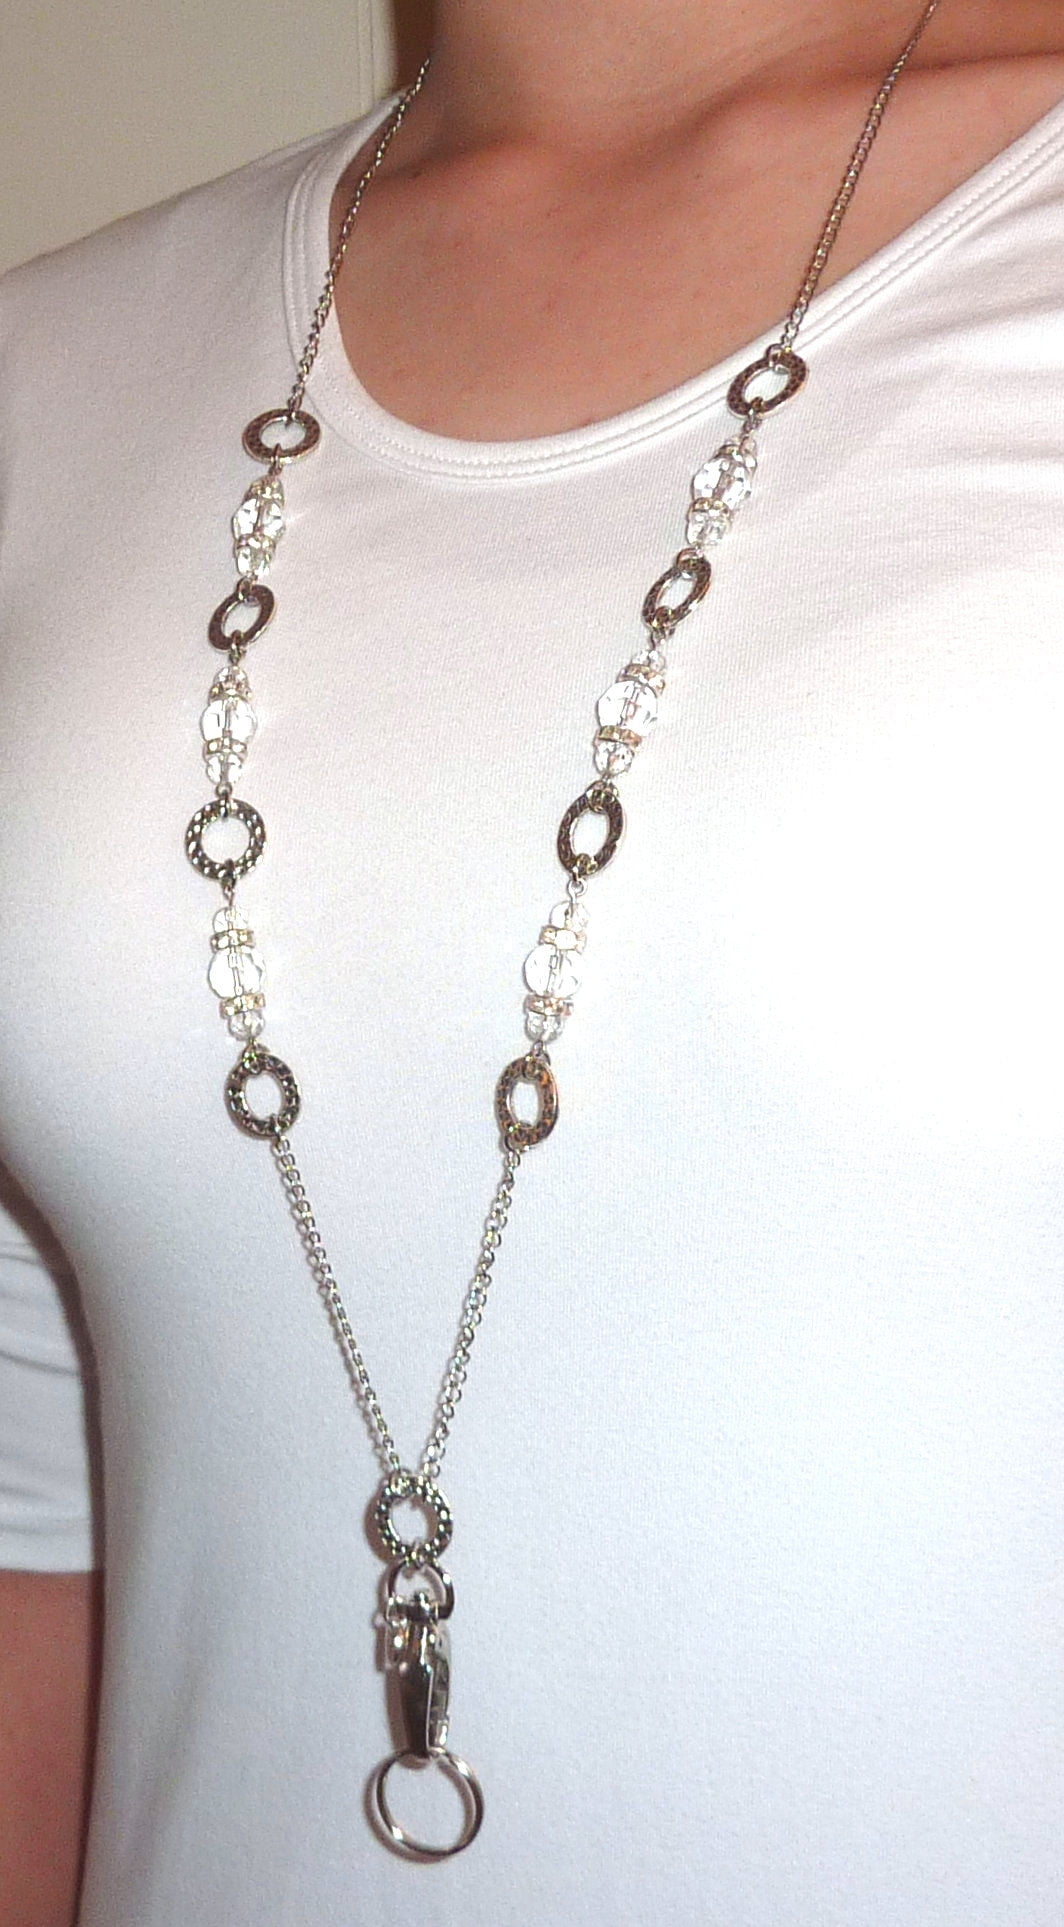 NJ-BC05 Royalbeier Fashion Bead Lanyard Necklace Long Jewelry Lanyard Necklace for Keys ID Badge Holder for Women Ladies OL